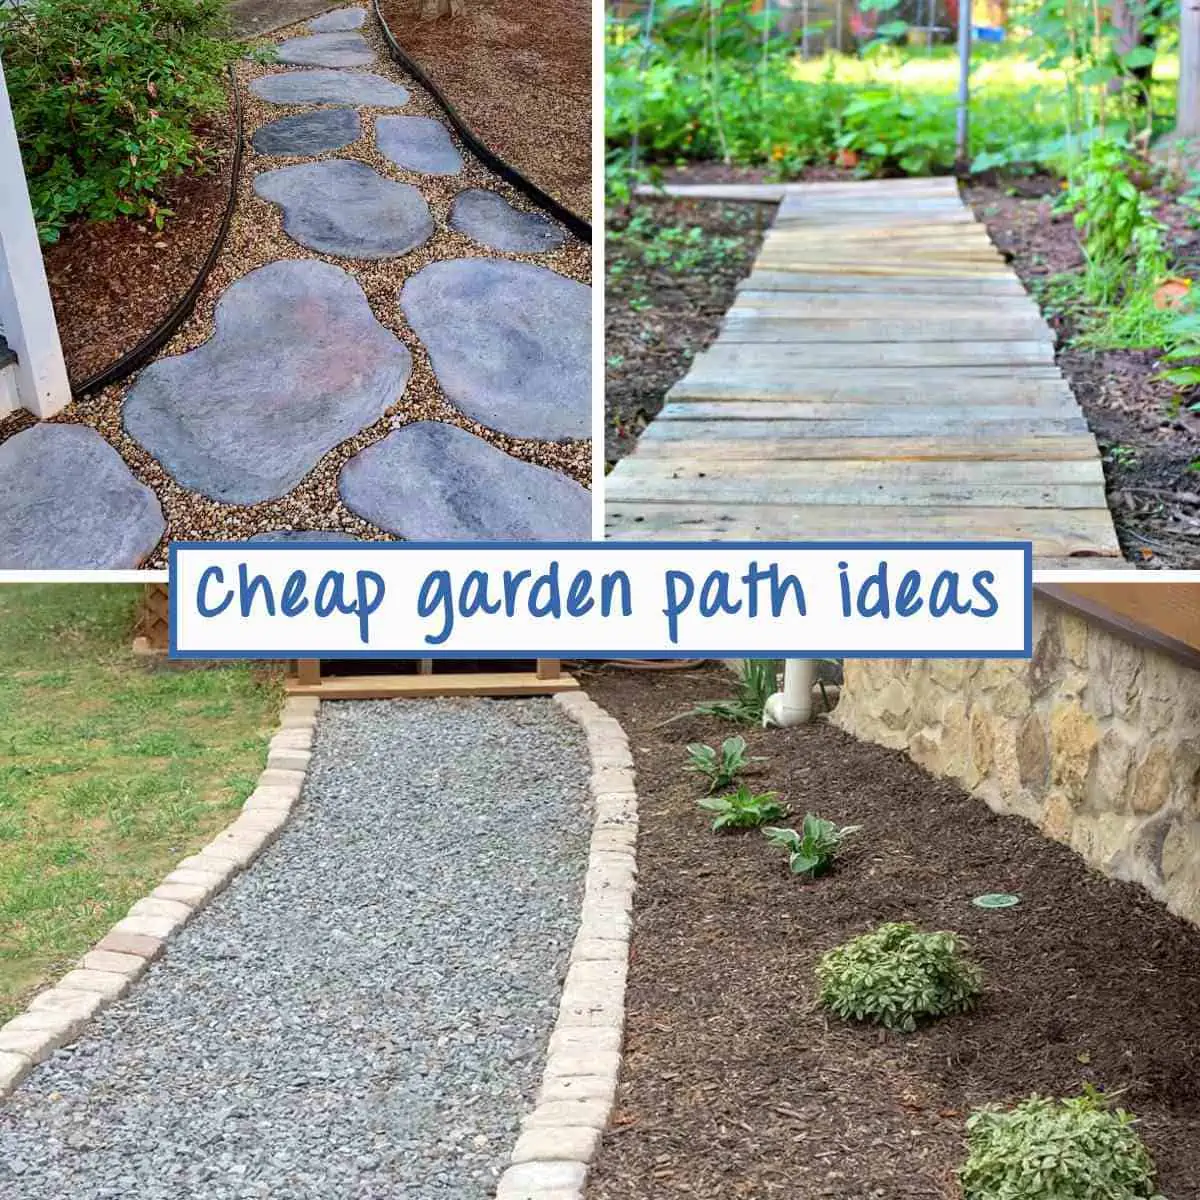 15 Cheap Garden Path Ideas and Helpful Tutorials!